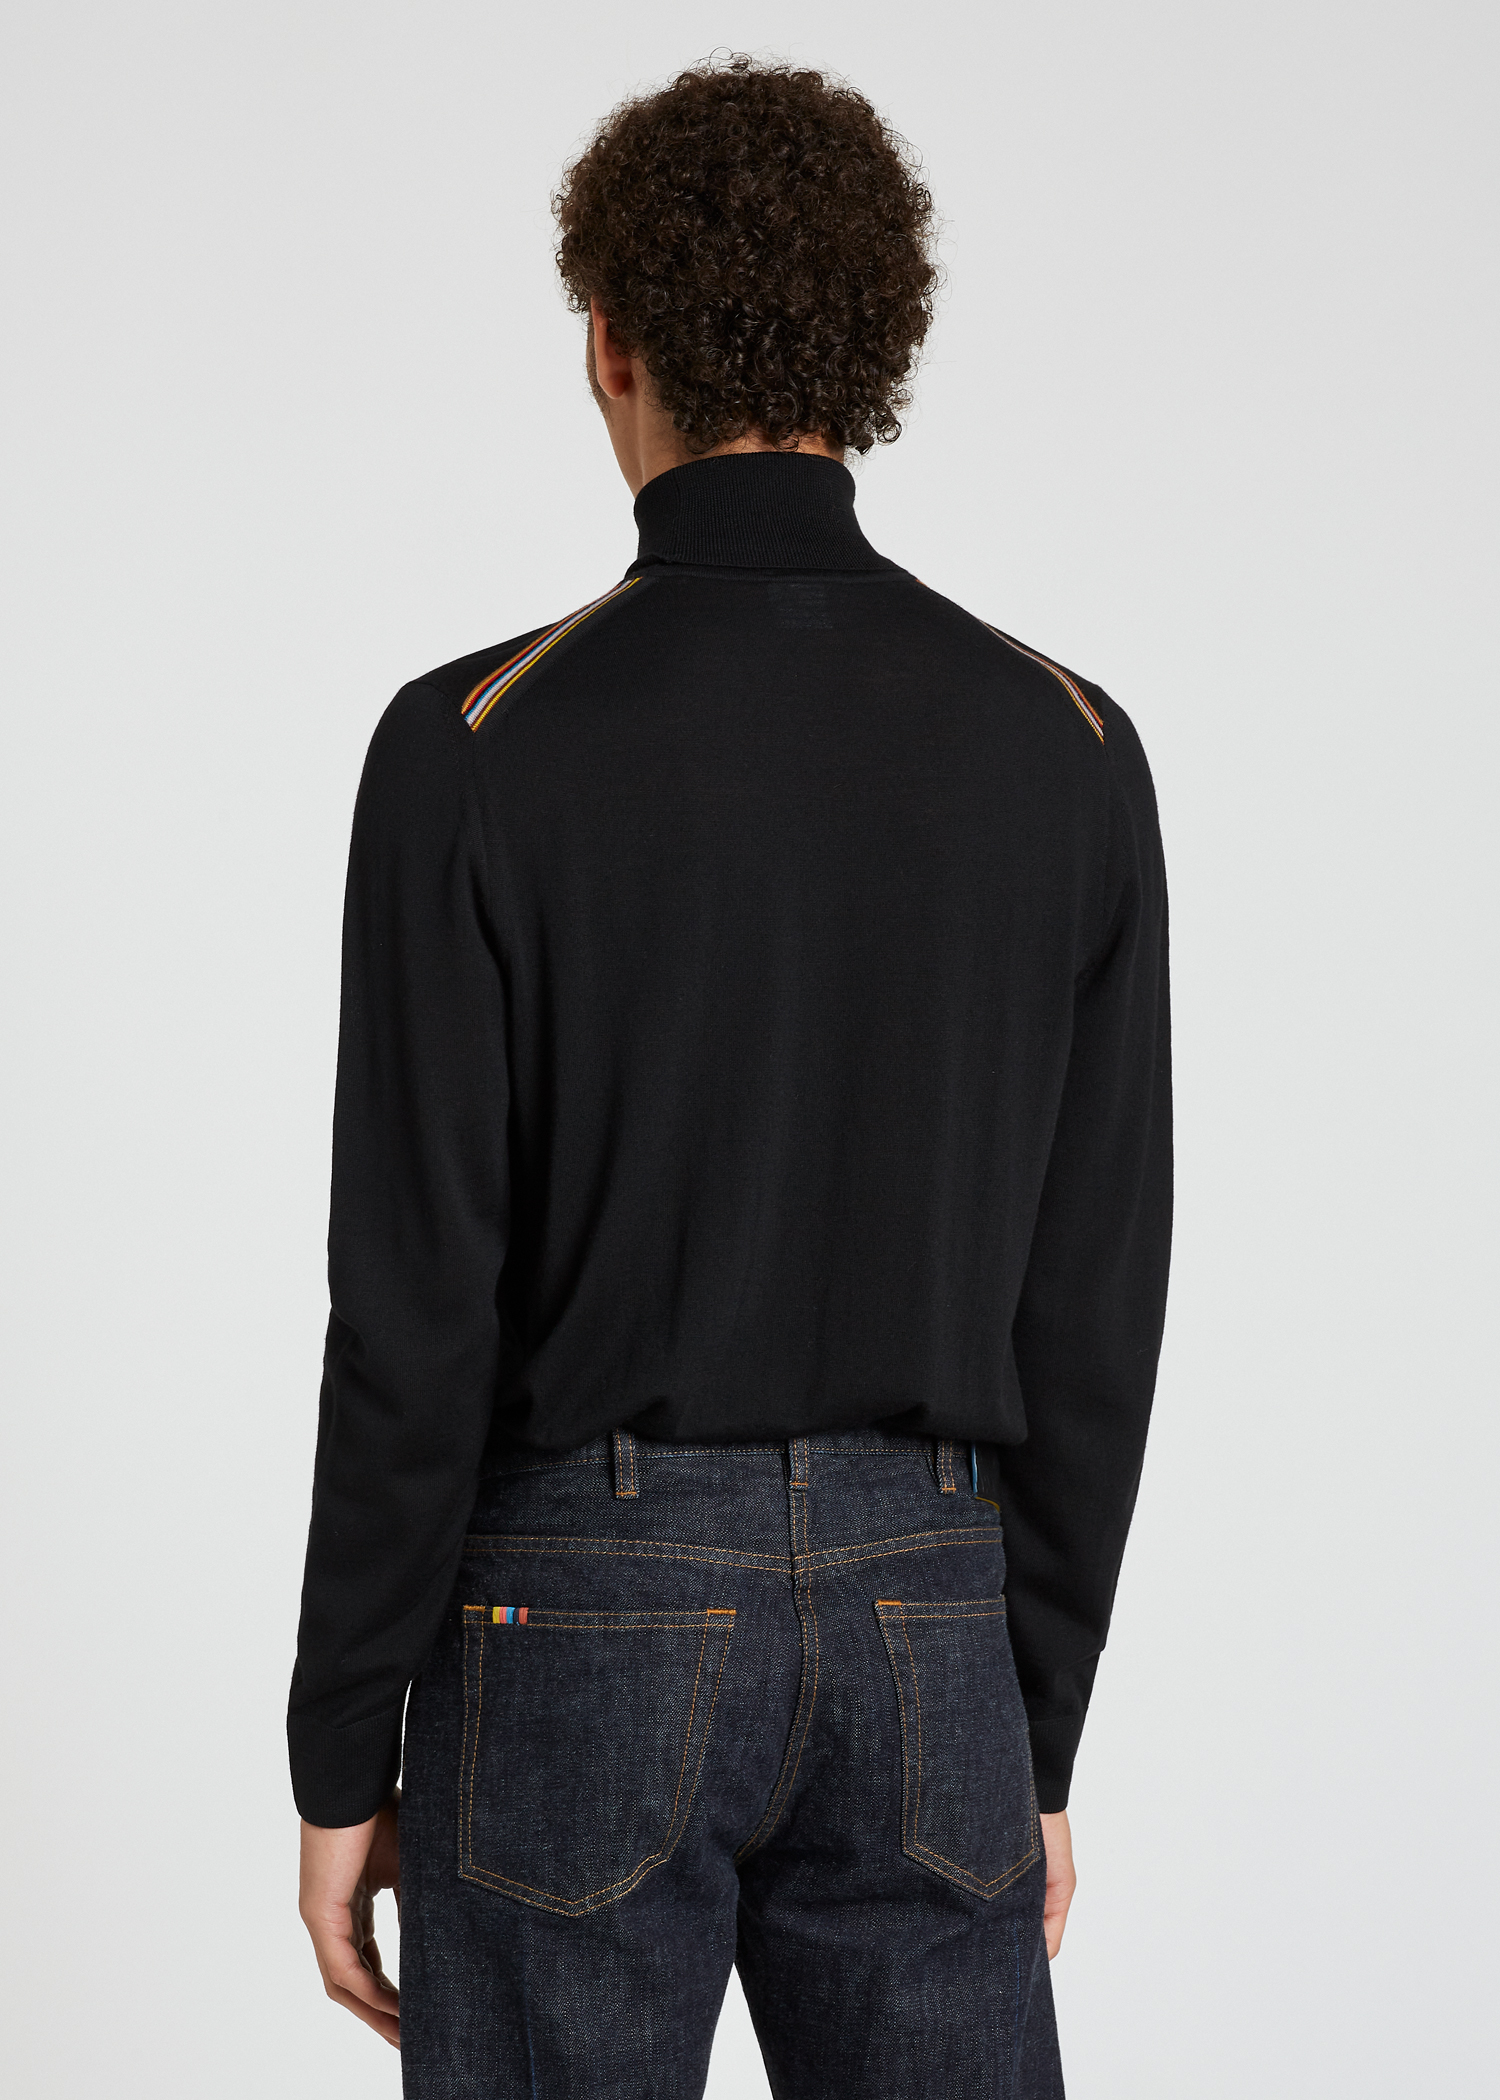 Model back view - Men's Black Merino Roll-Neck Sweater With 'Signature Stripe' Paul Smith